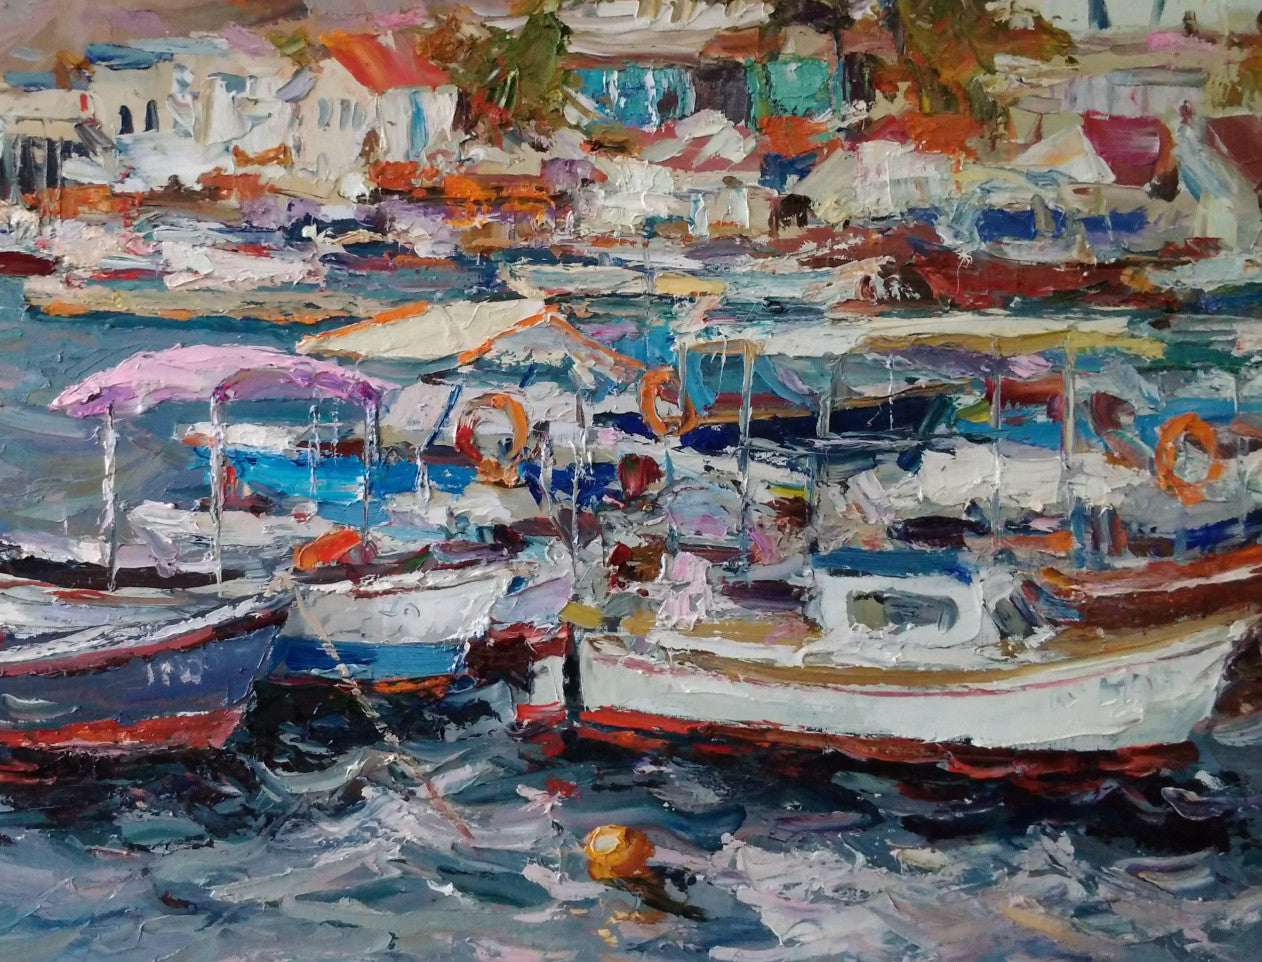 Boats Near the Pier: an oil painting by Alexander Nikolaevich Cherednichenko